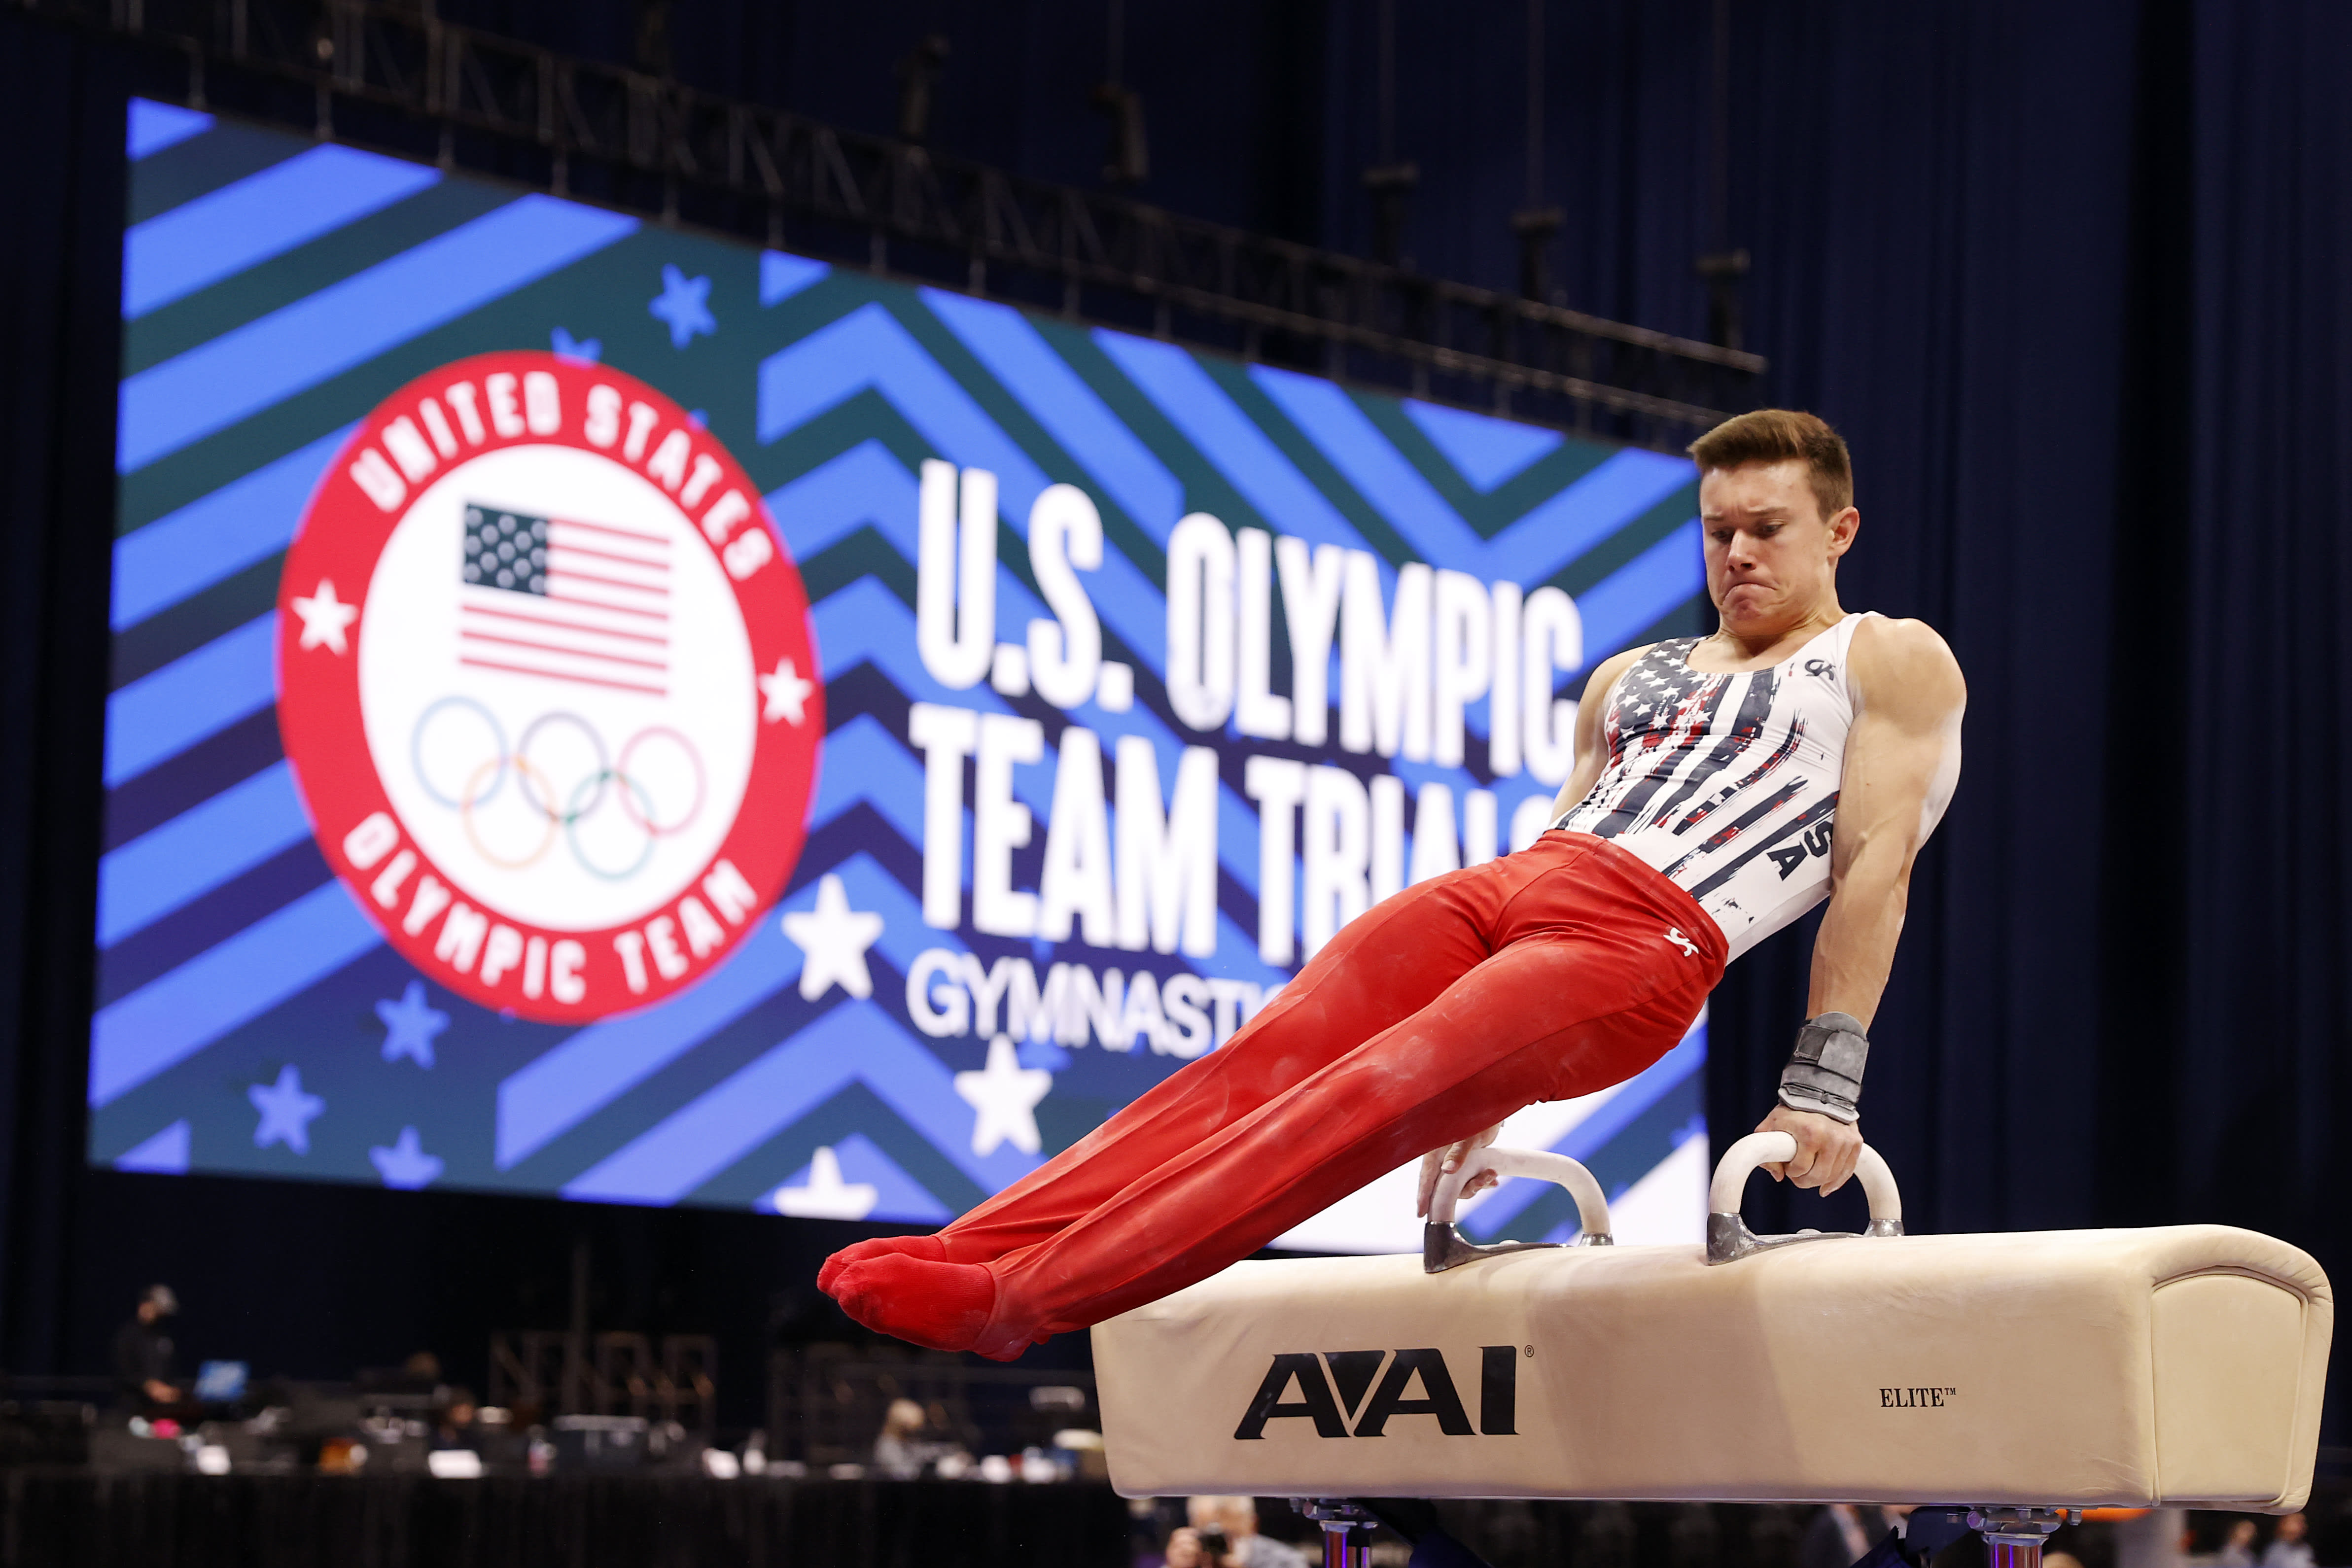 Brody Malone Sam Mikulak Headline U S Men S Gymnastics Team For Tokyo